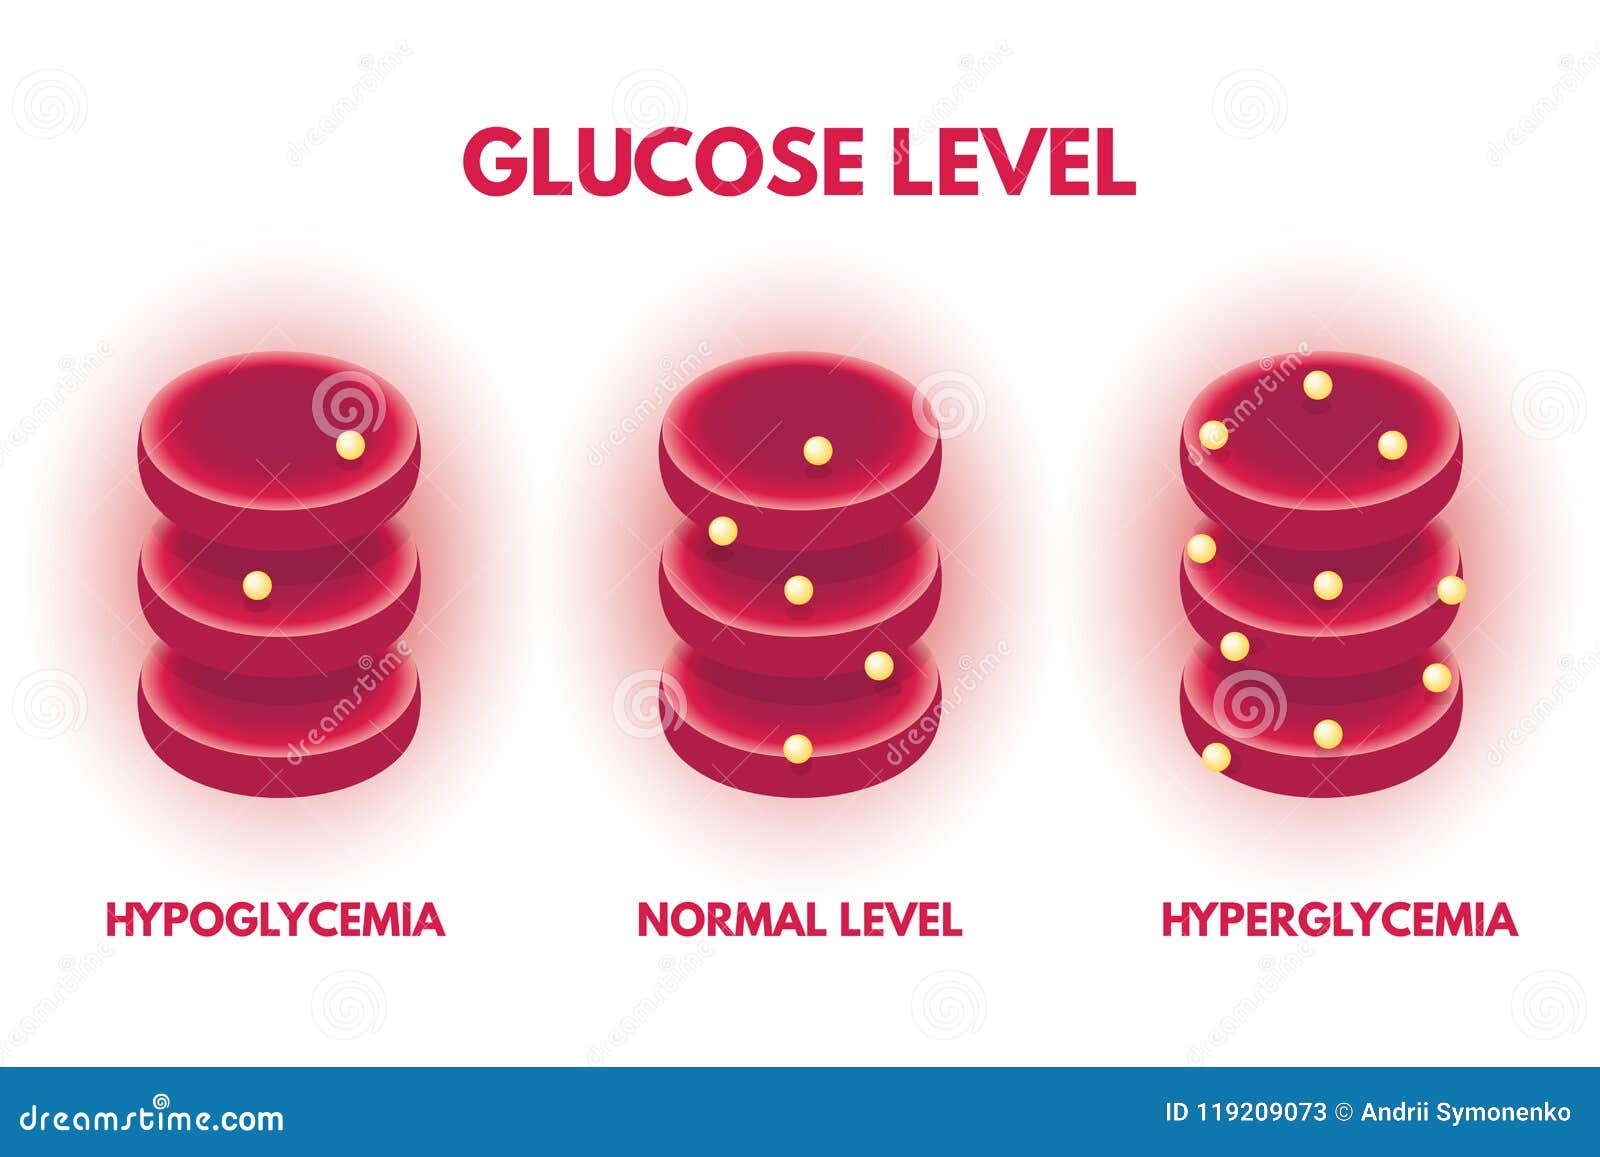 hyperglycemia, hypjglycemia human glucose levels isometric.